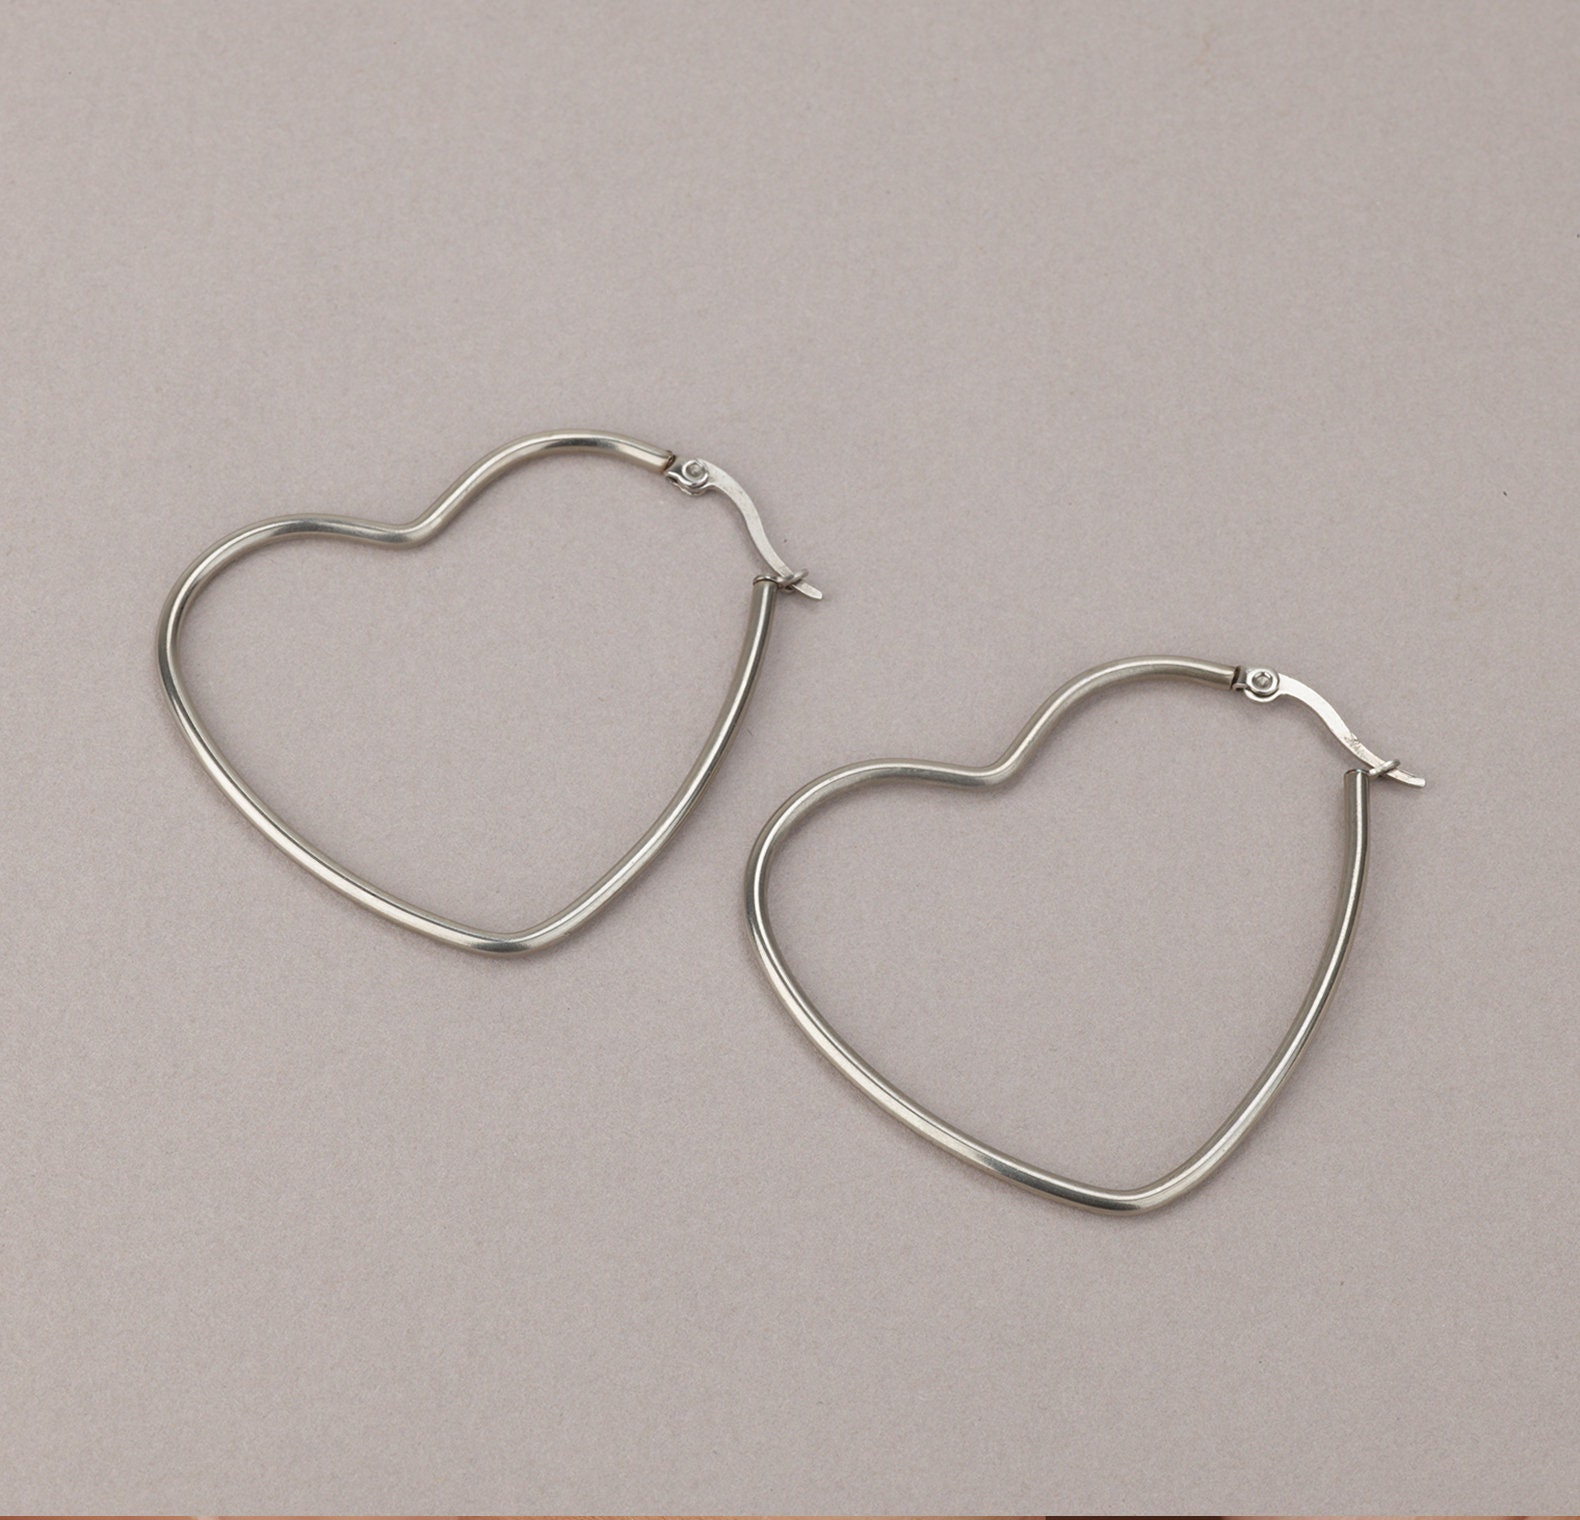 Silver Hoop Earrings Heart Hoop Earrings Large Hoops Open | Etsy